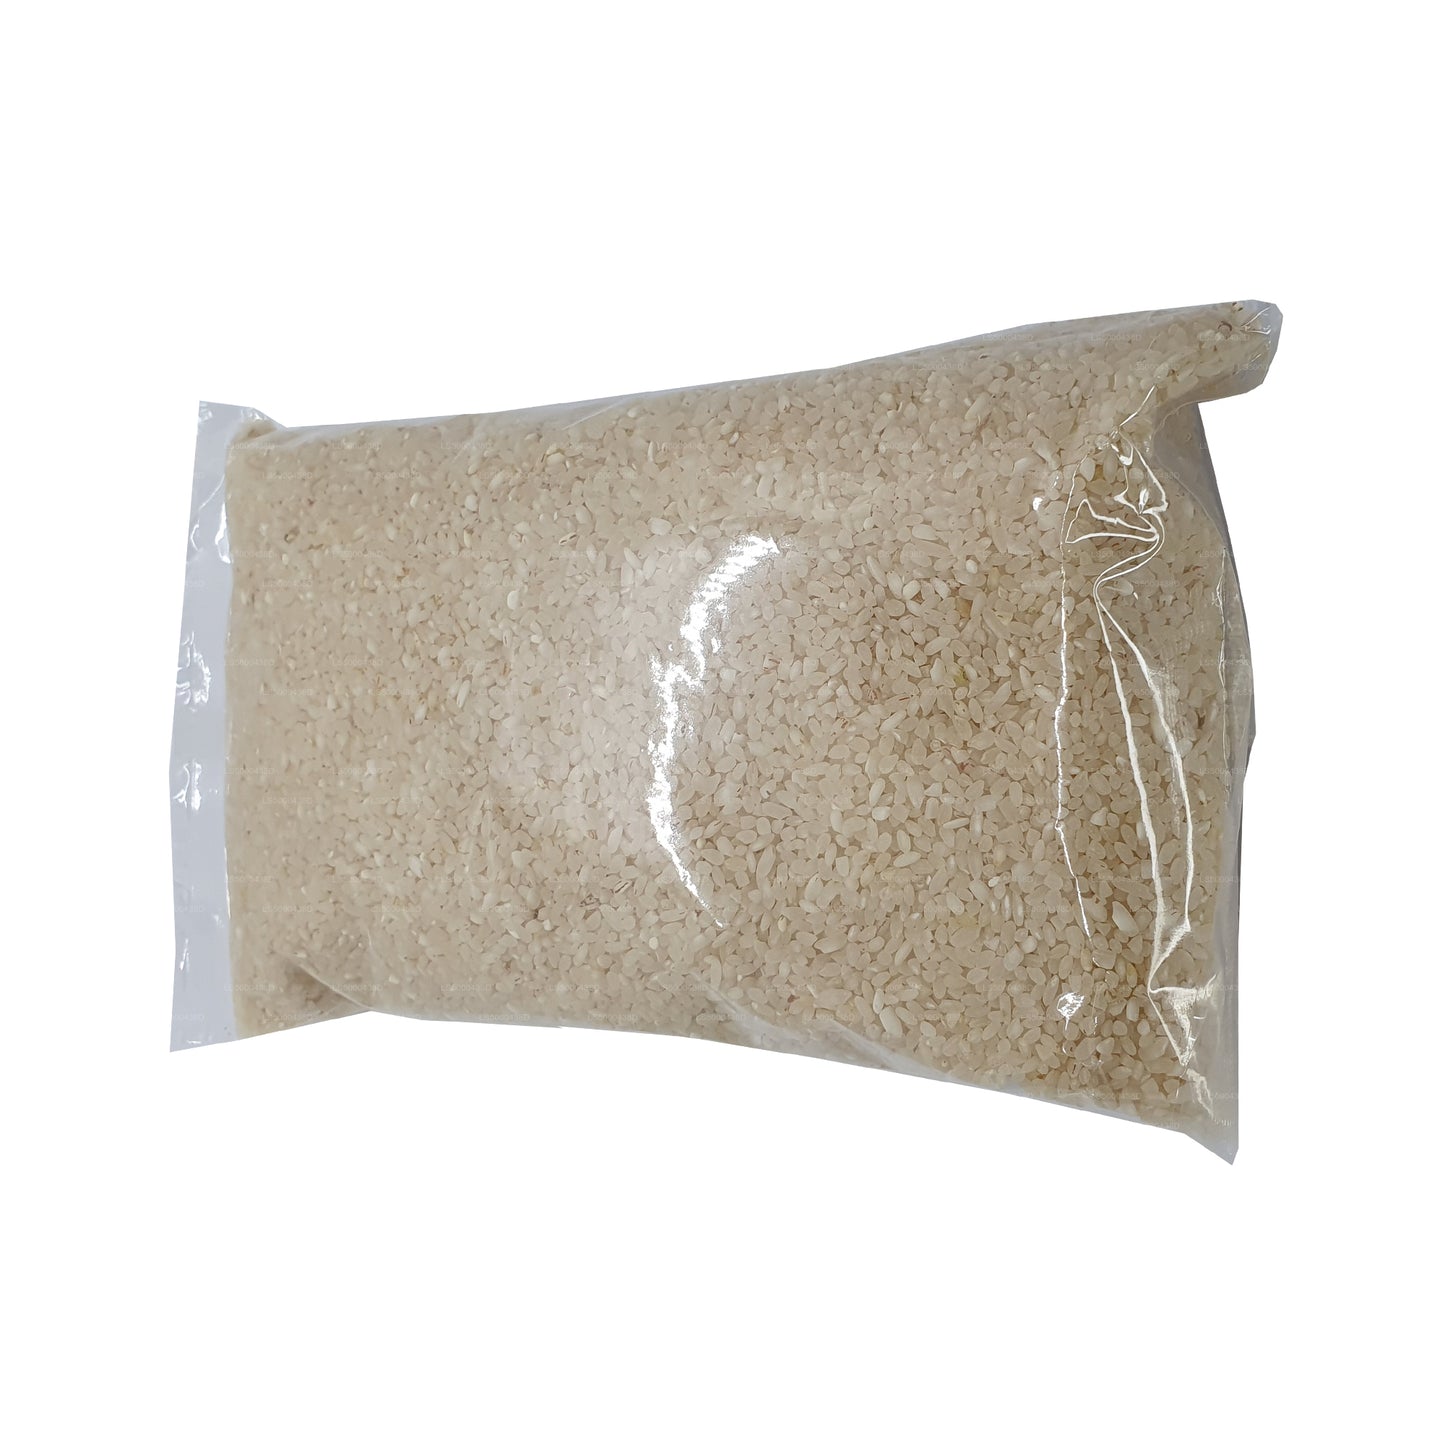 vCeylon Suwandel Reis (3kg)